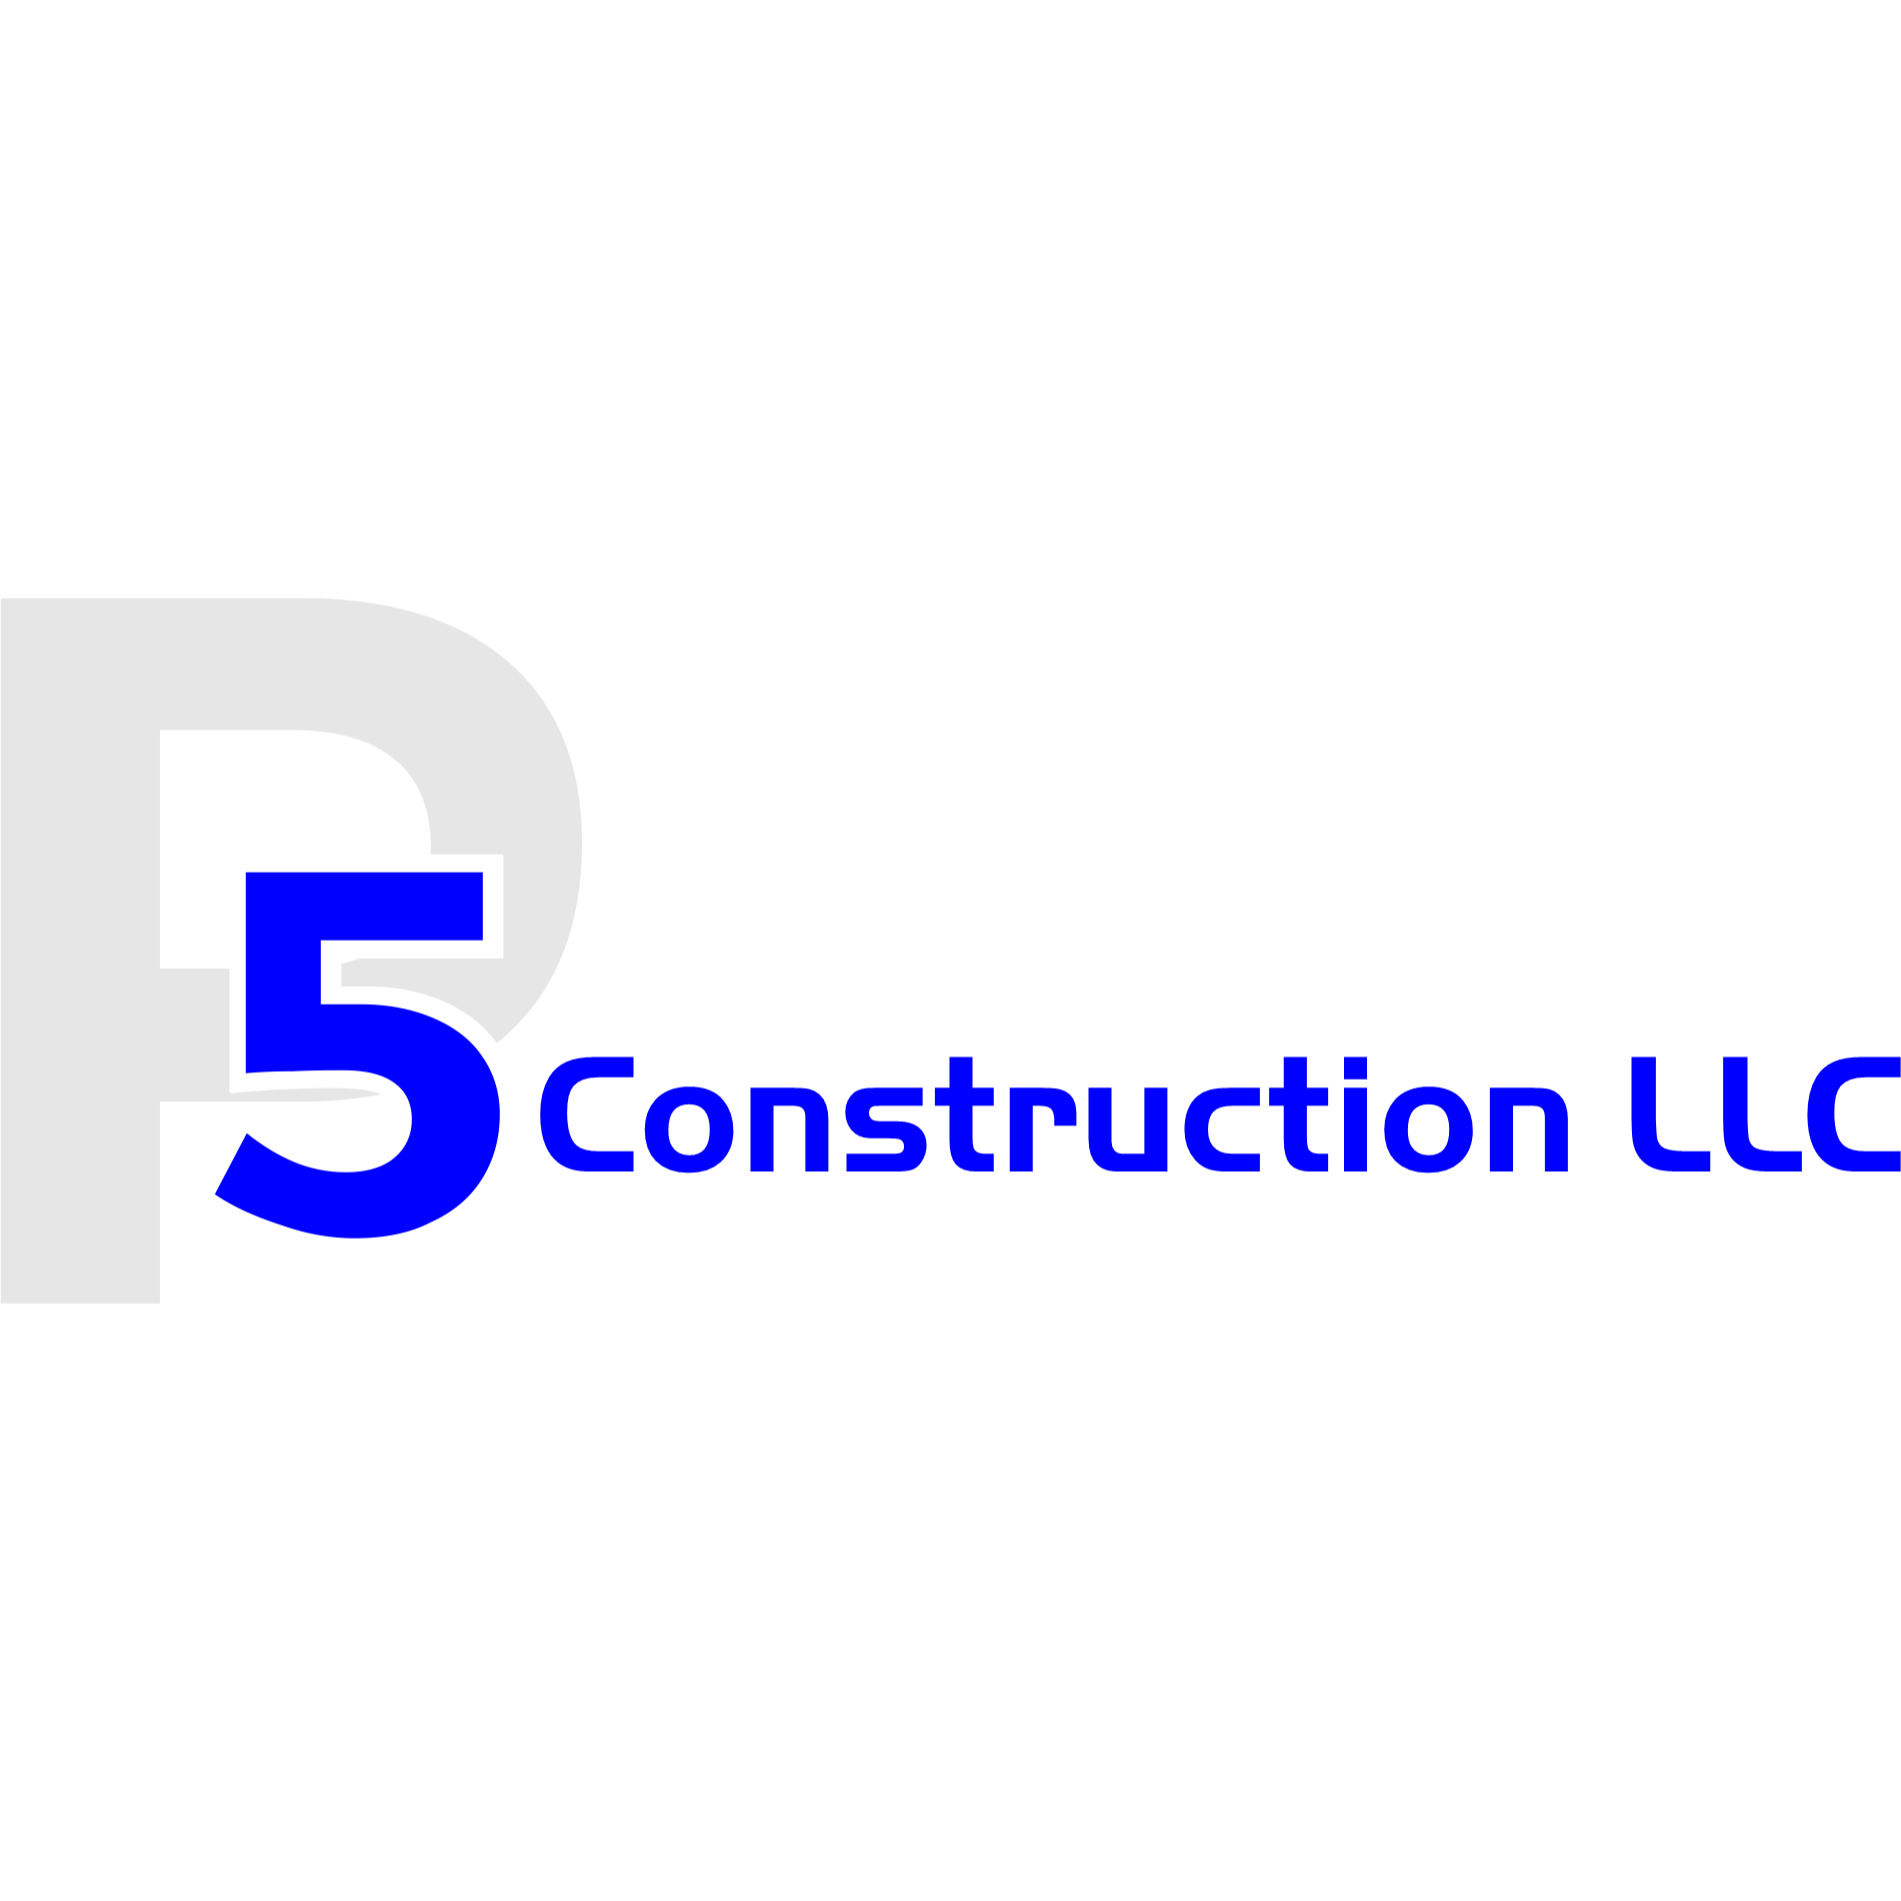 P5 Construction LLC